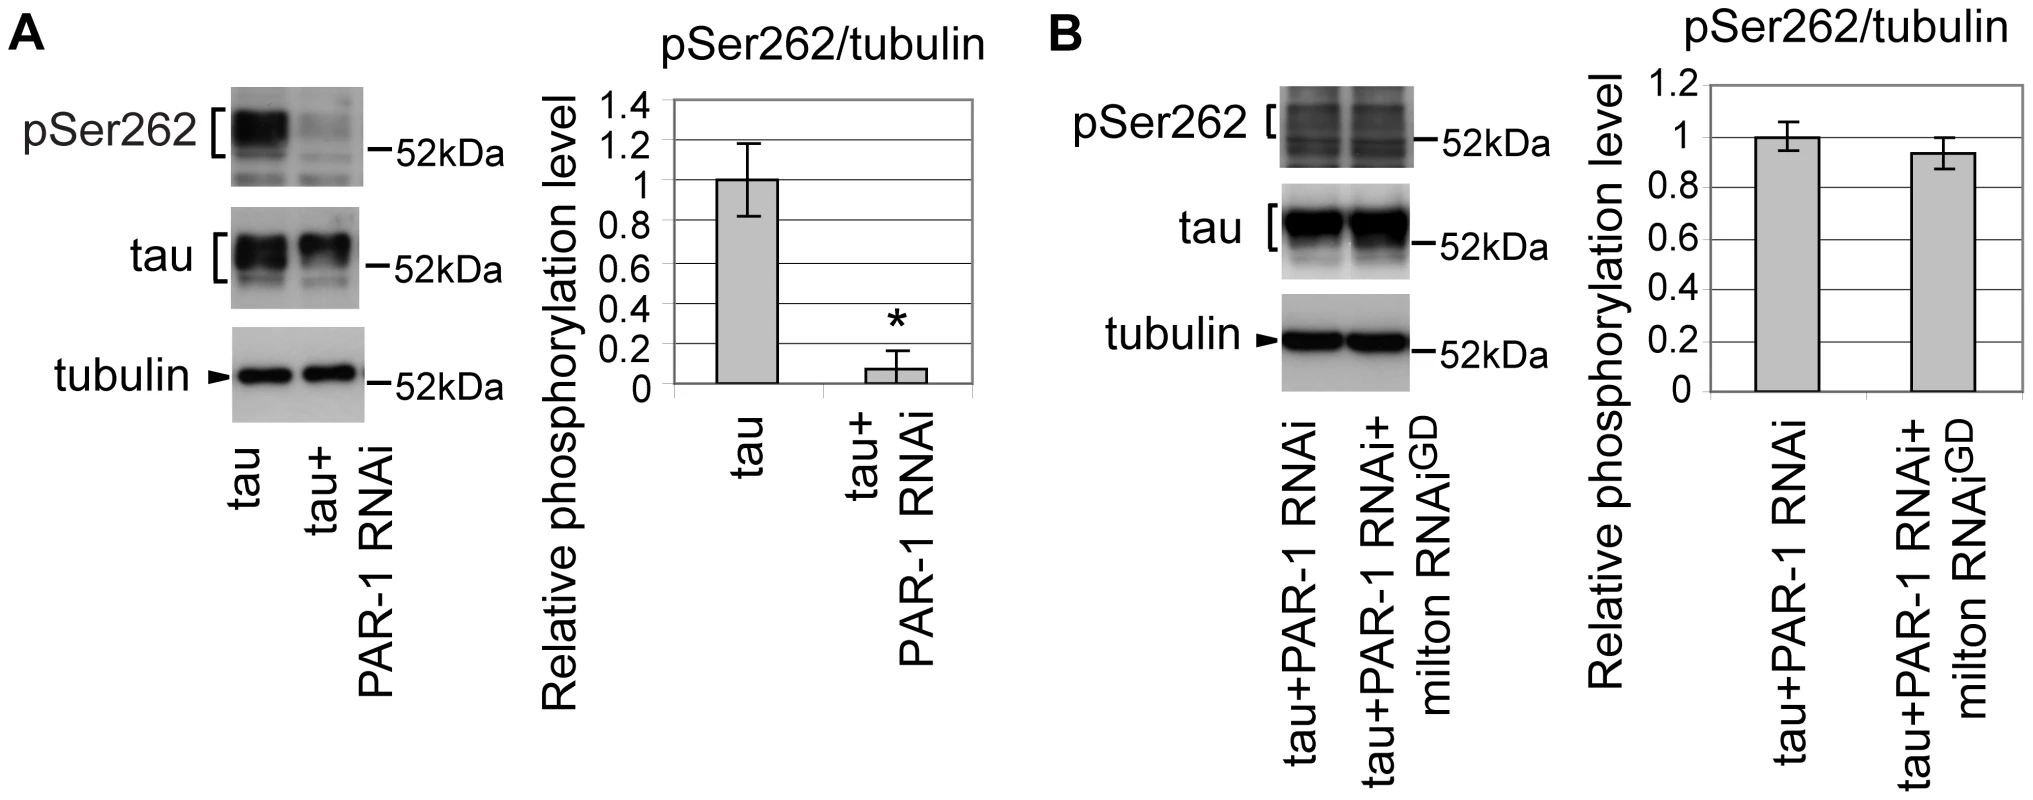 PAR-1 mediates the increase in tau phosphorylation at Ser262 caused by milton knockdown.